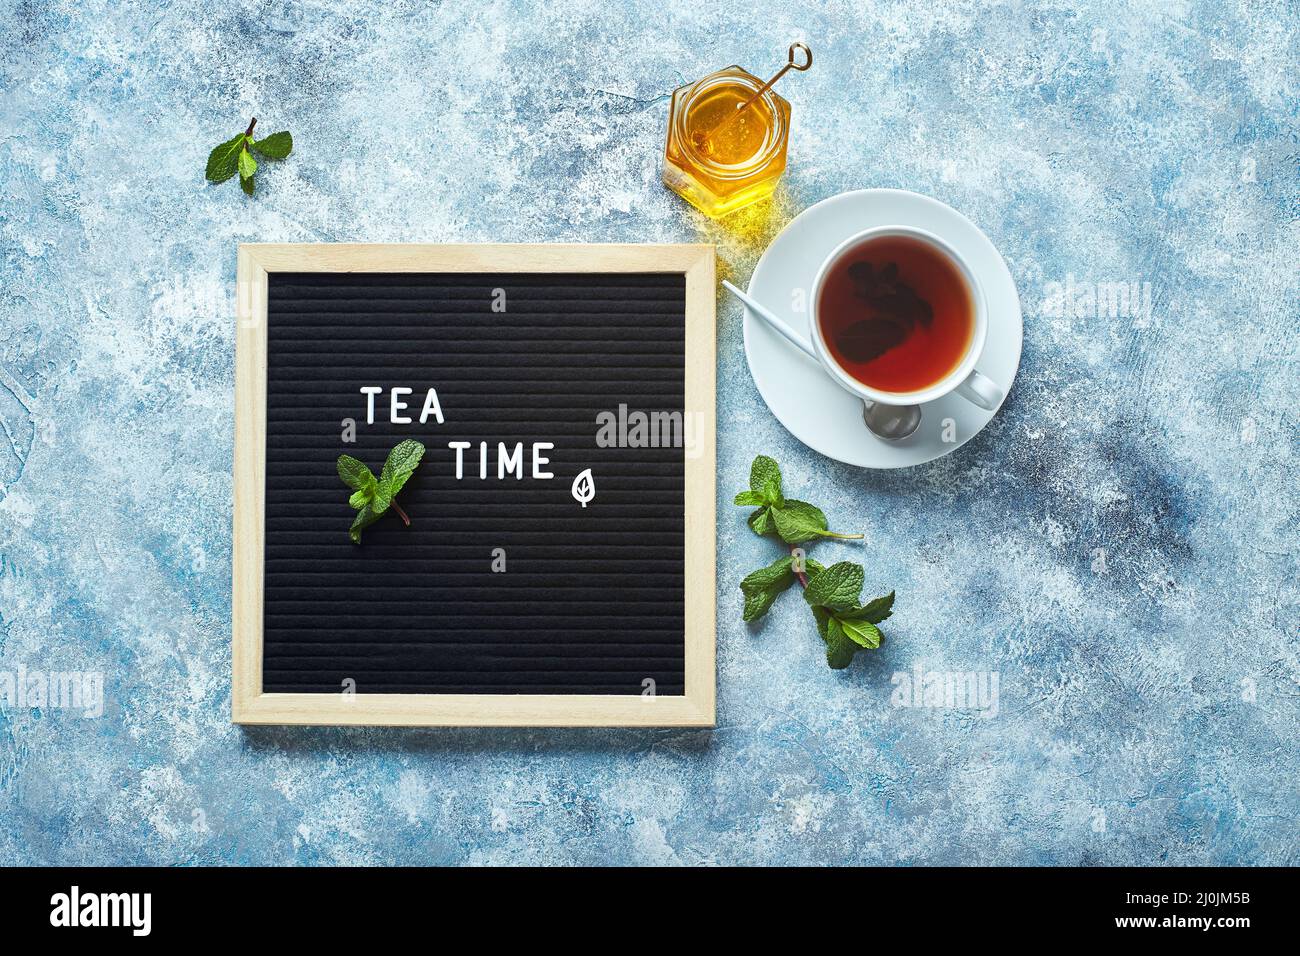 Hora del té. Pizarra negra con texto sobre mesa azul con vaso de té con hojas de menta Foto de stock